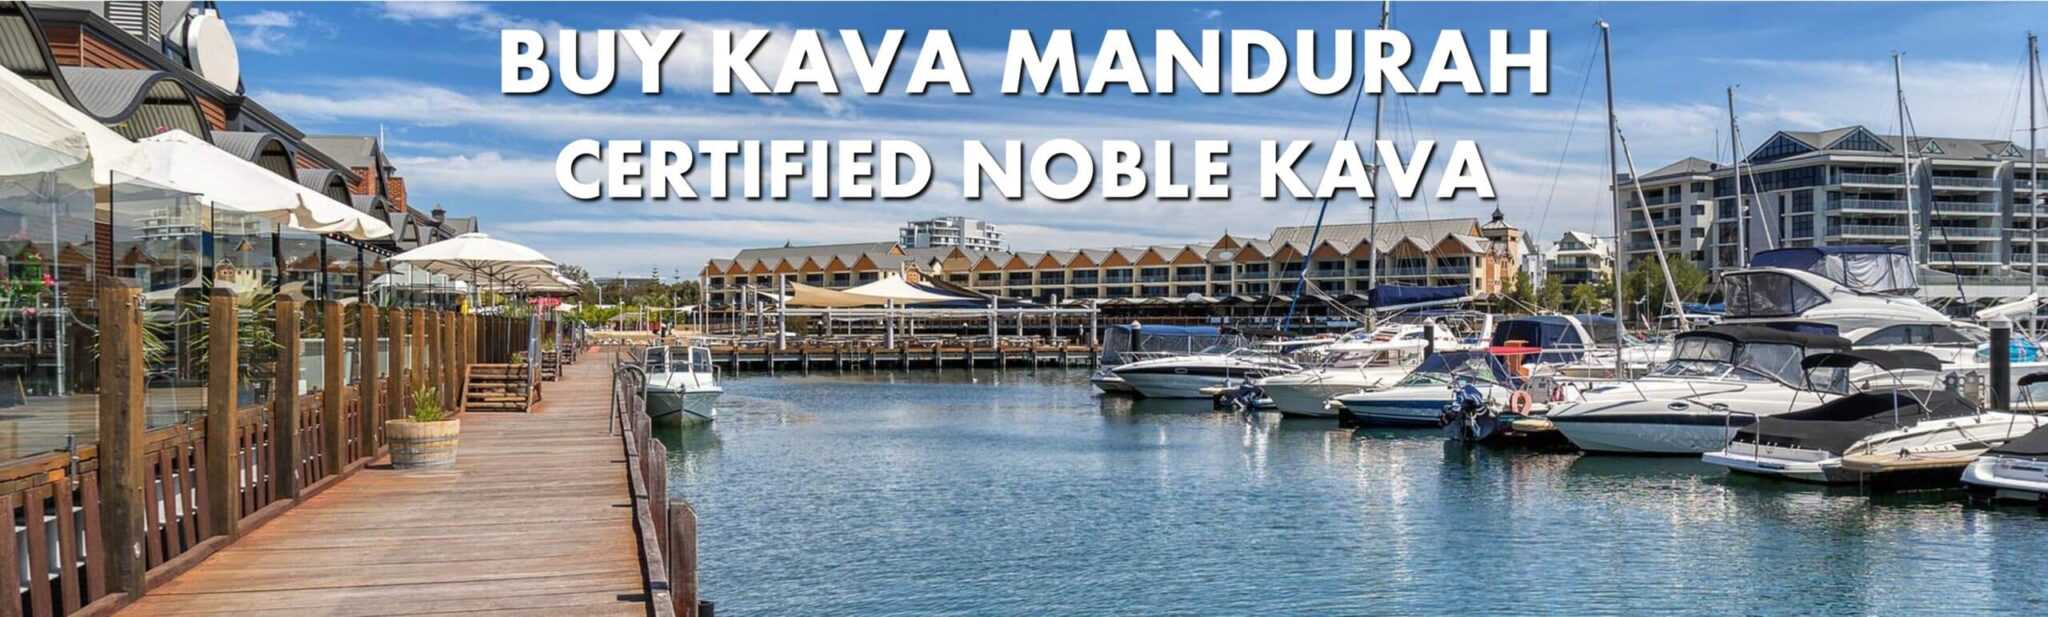 Marina in Mandurah Western Australia with caption Buy Kava Mandurah Certified Noble Kava